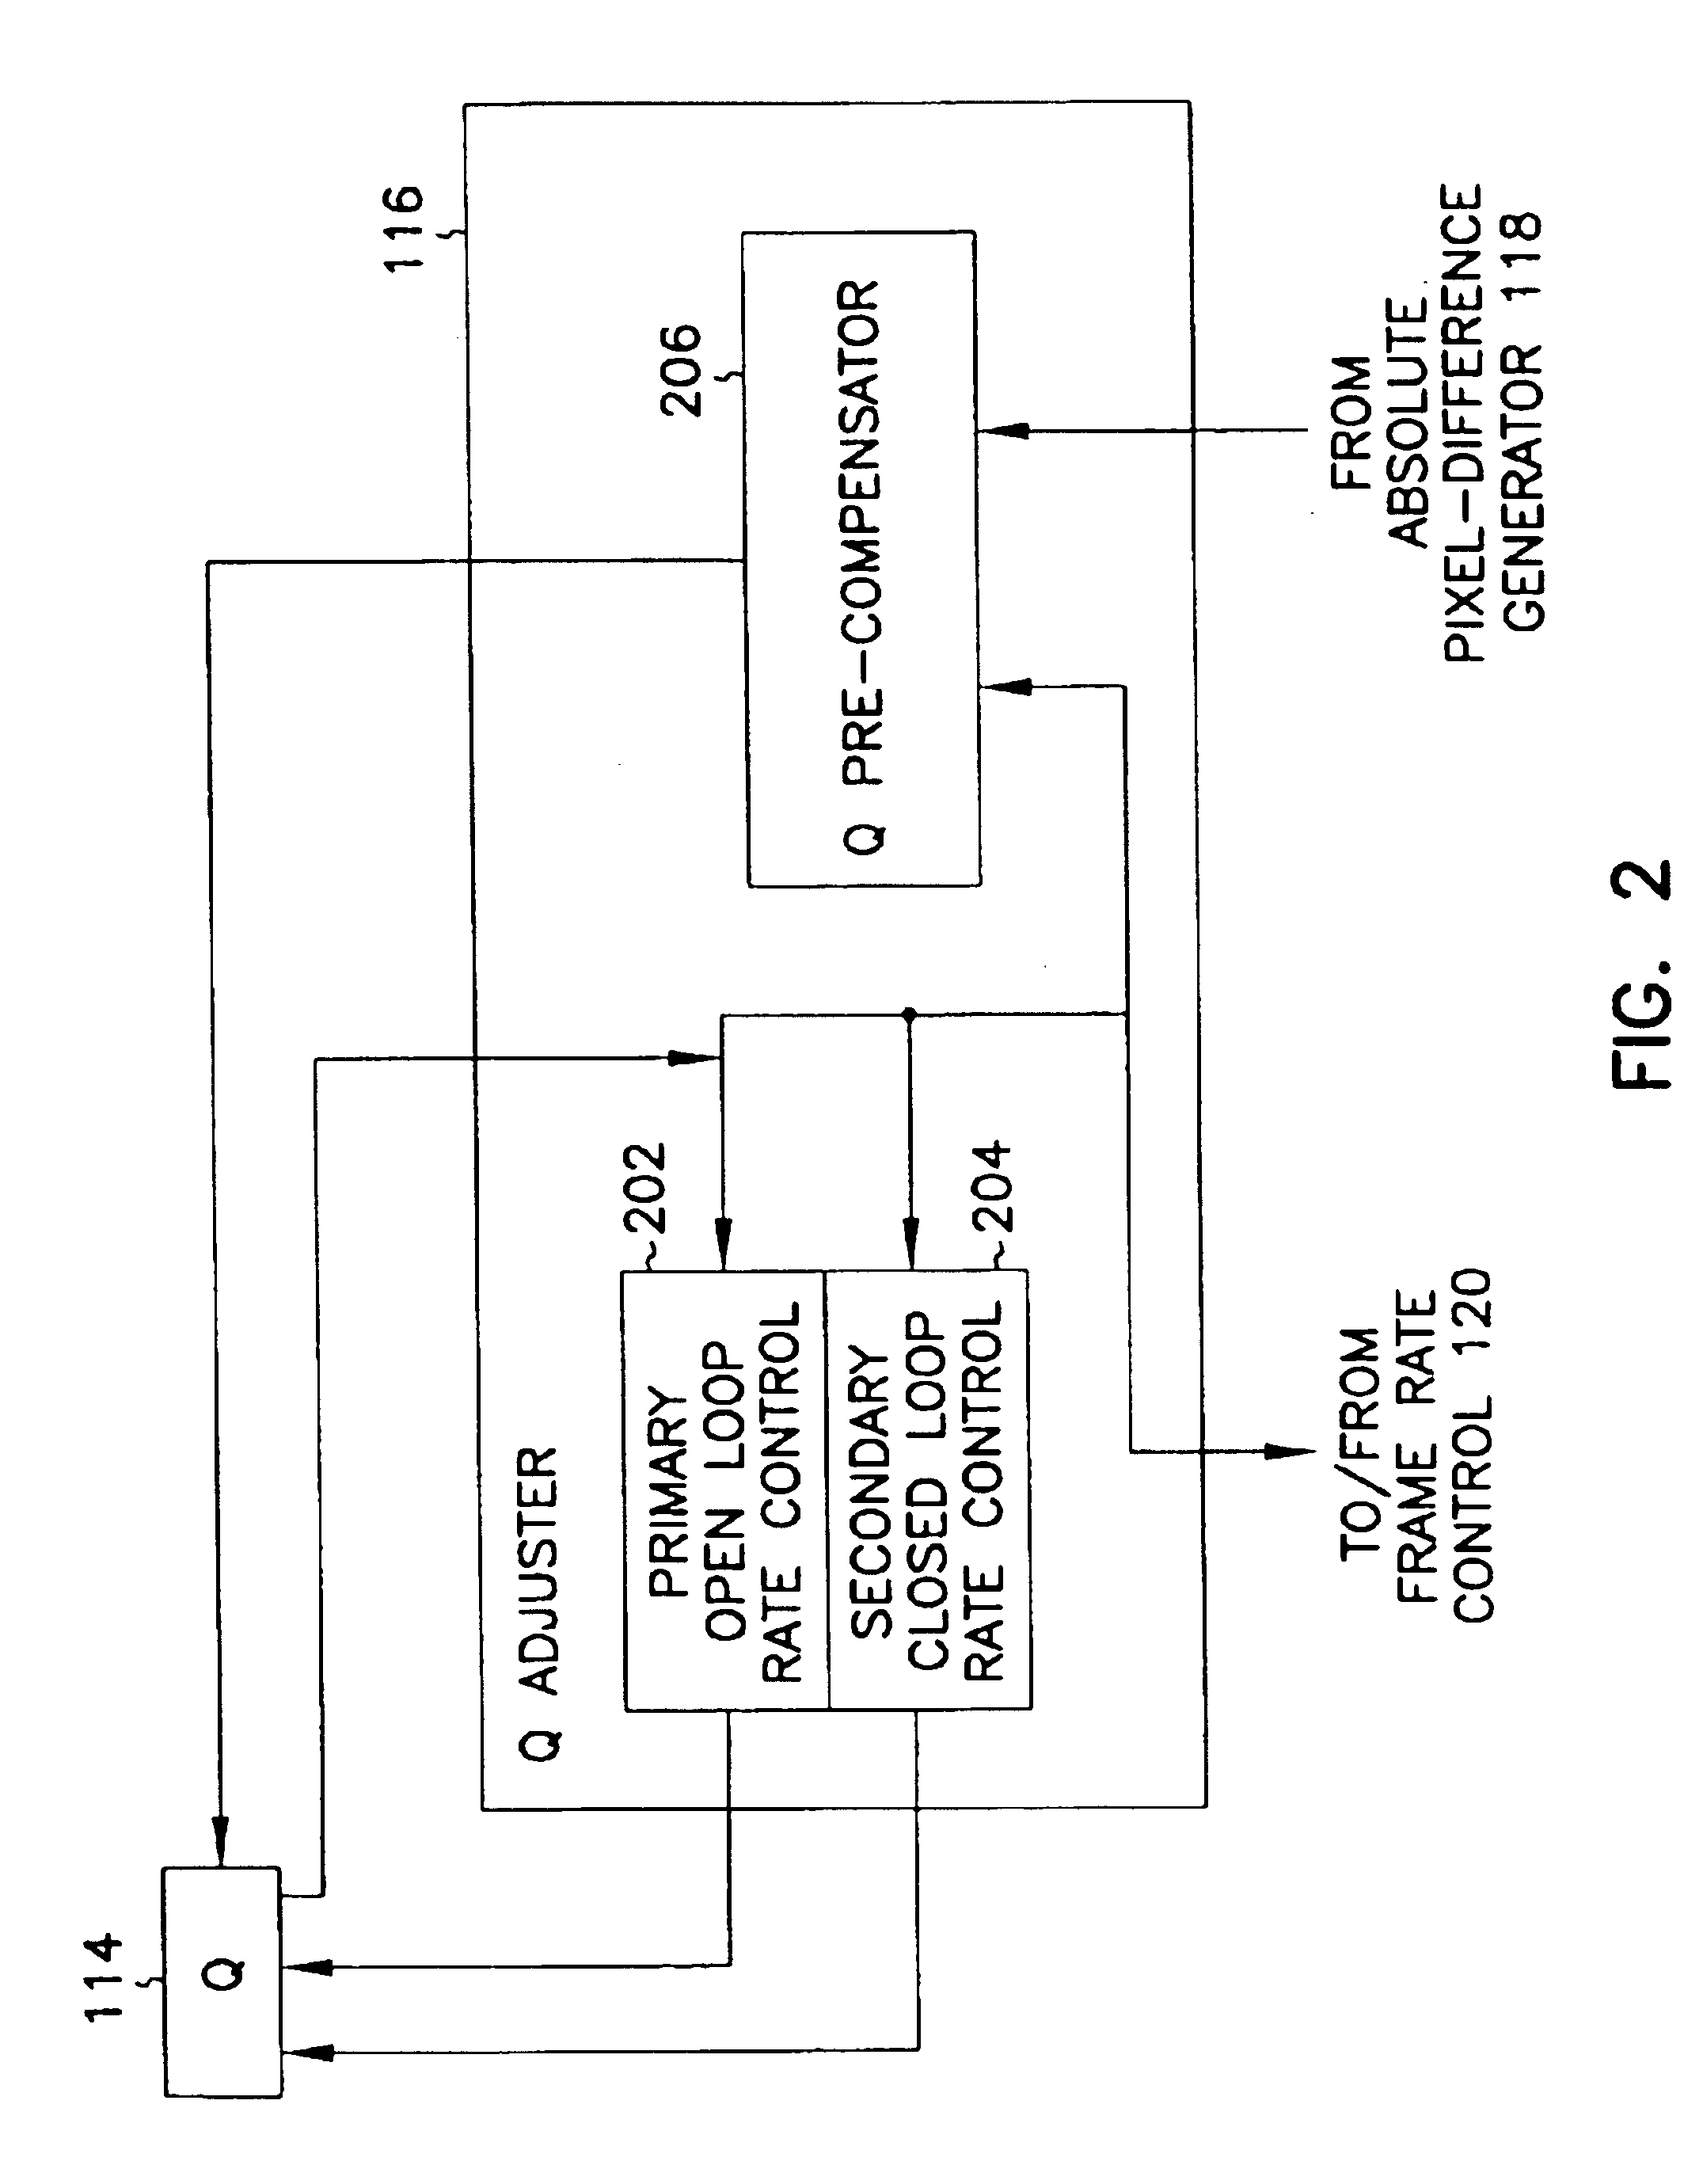 Motion video signal encoder and encoding method